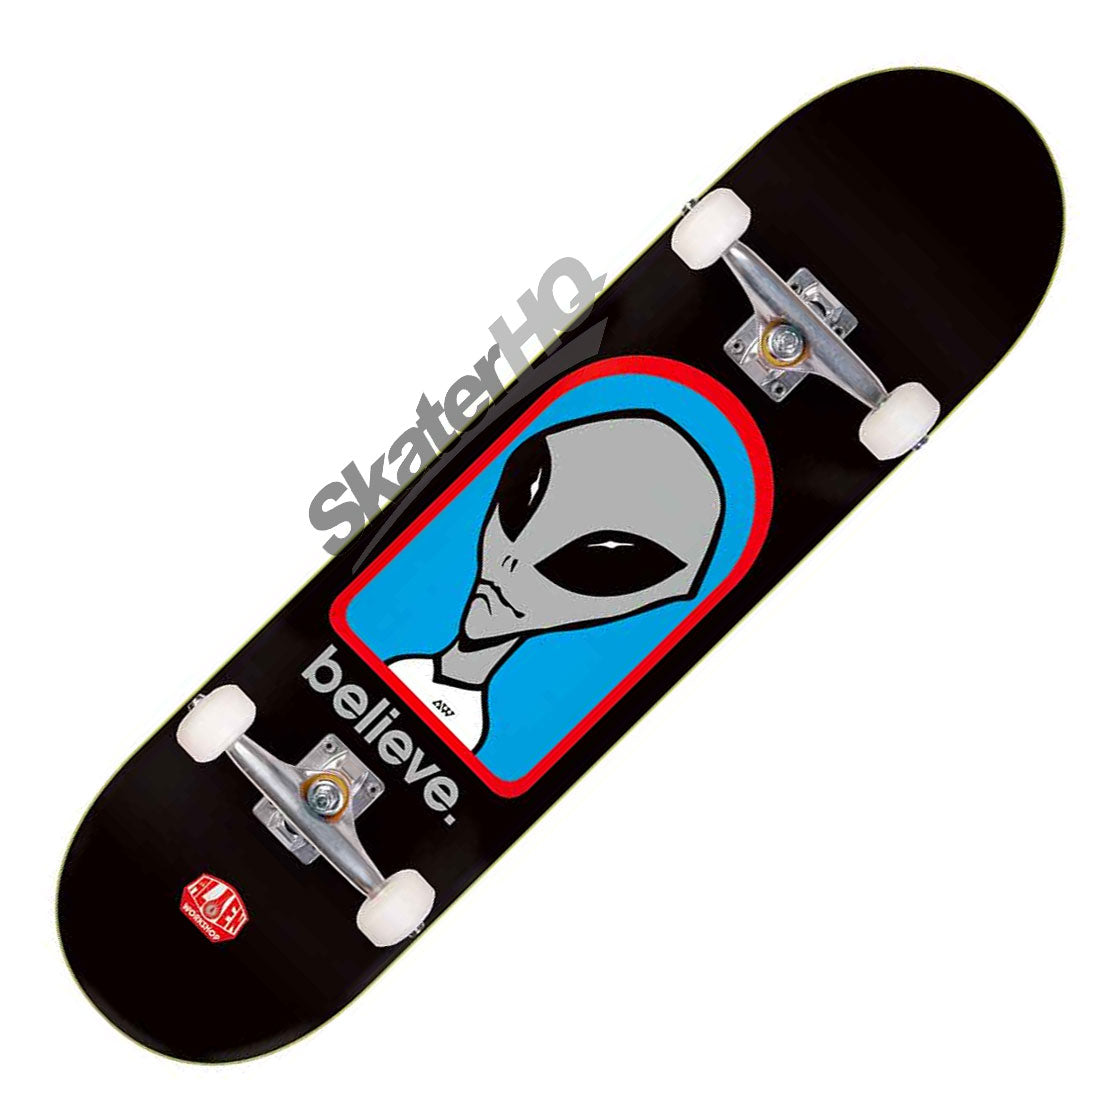 Alien Workshop Believe 7.75 Complete - Black Skateboard Completes Modern Street